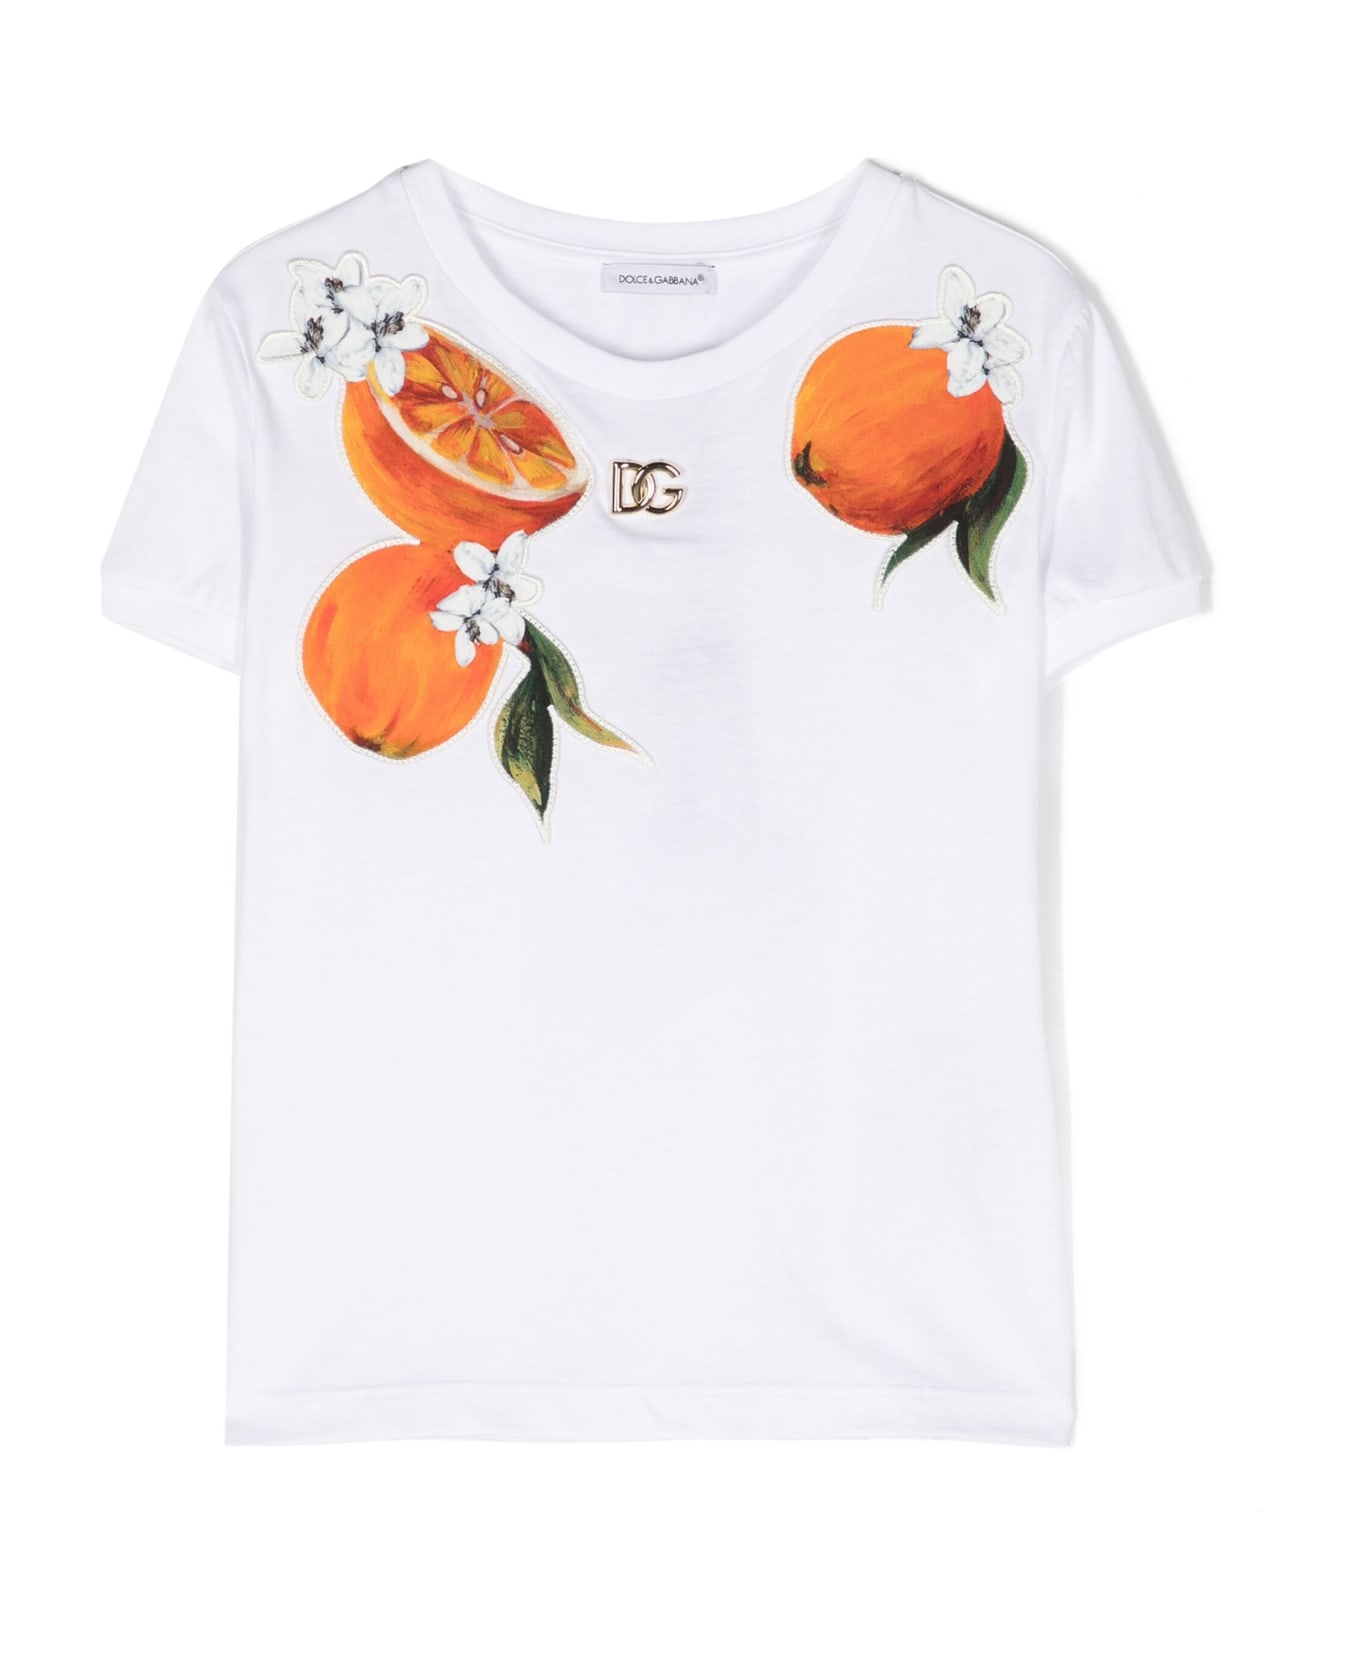 Dolce & Gabbana White T-shirt With Oranges Print - White